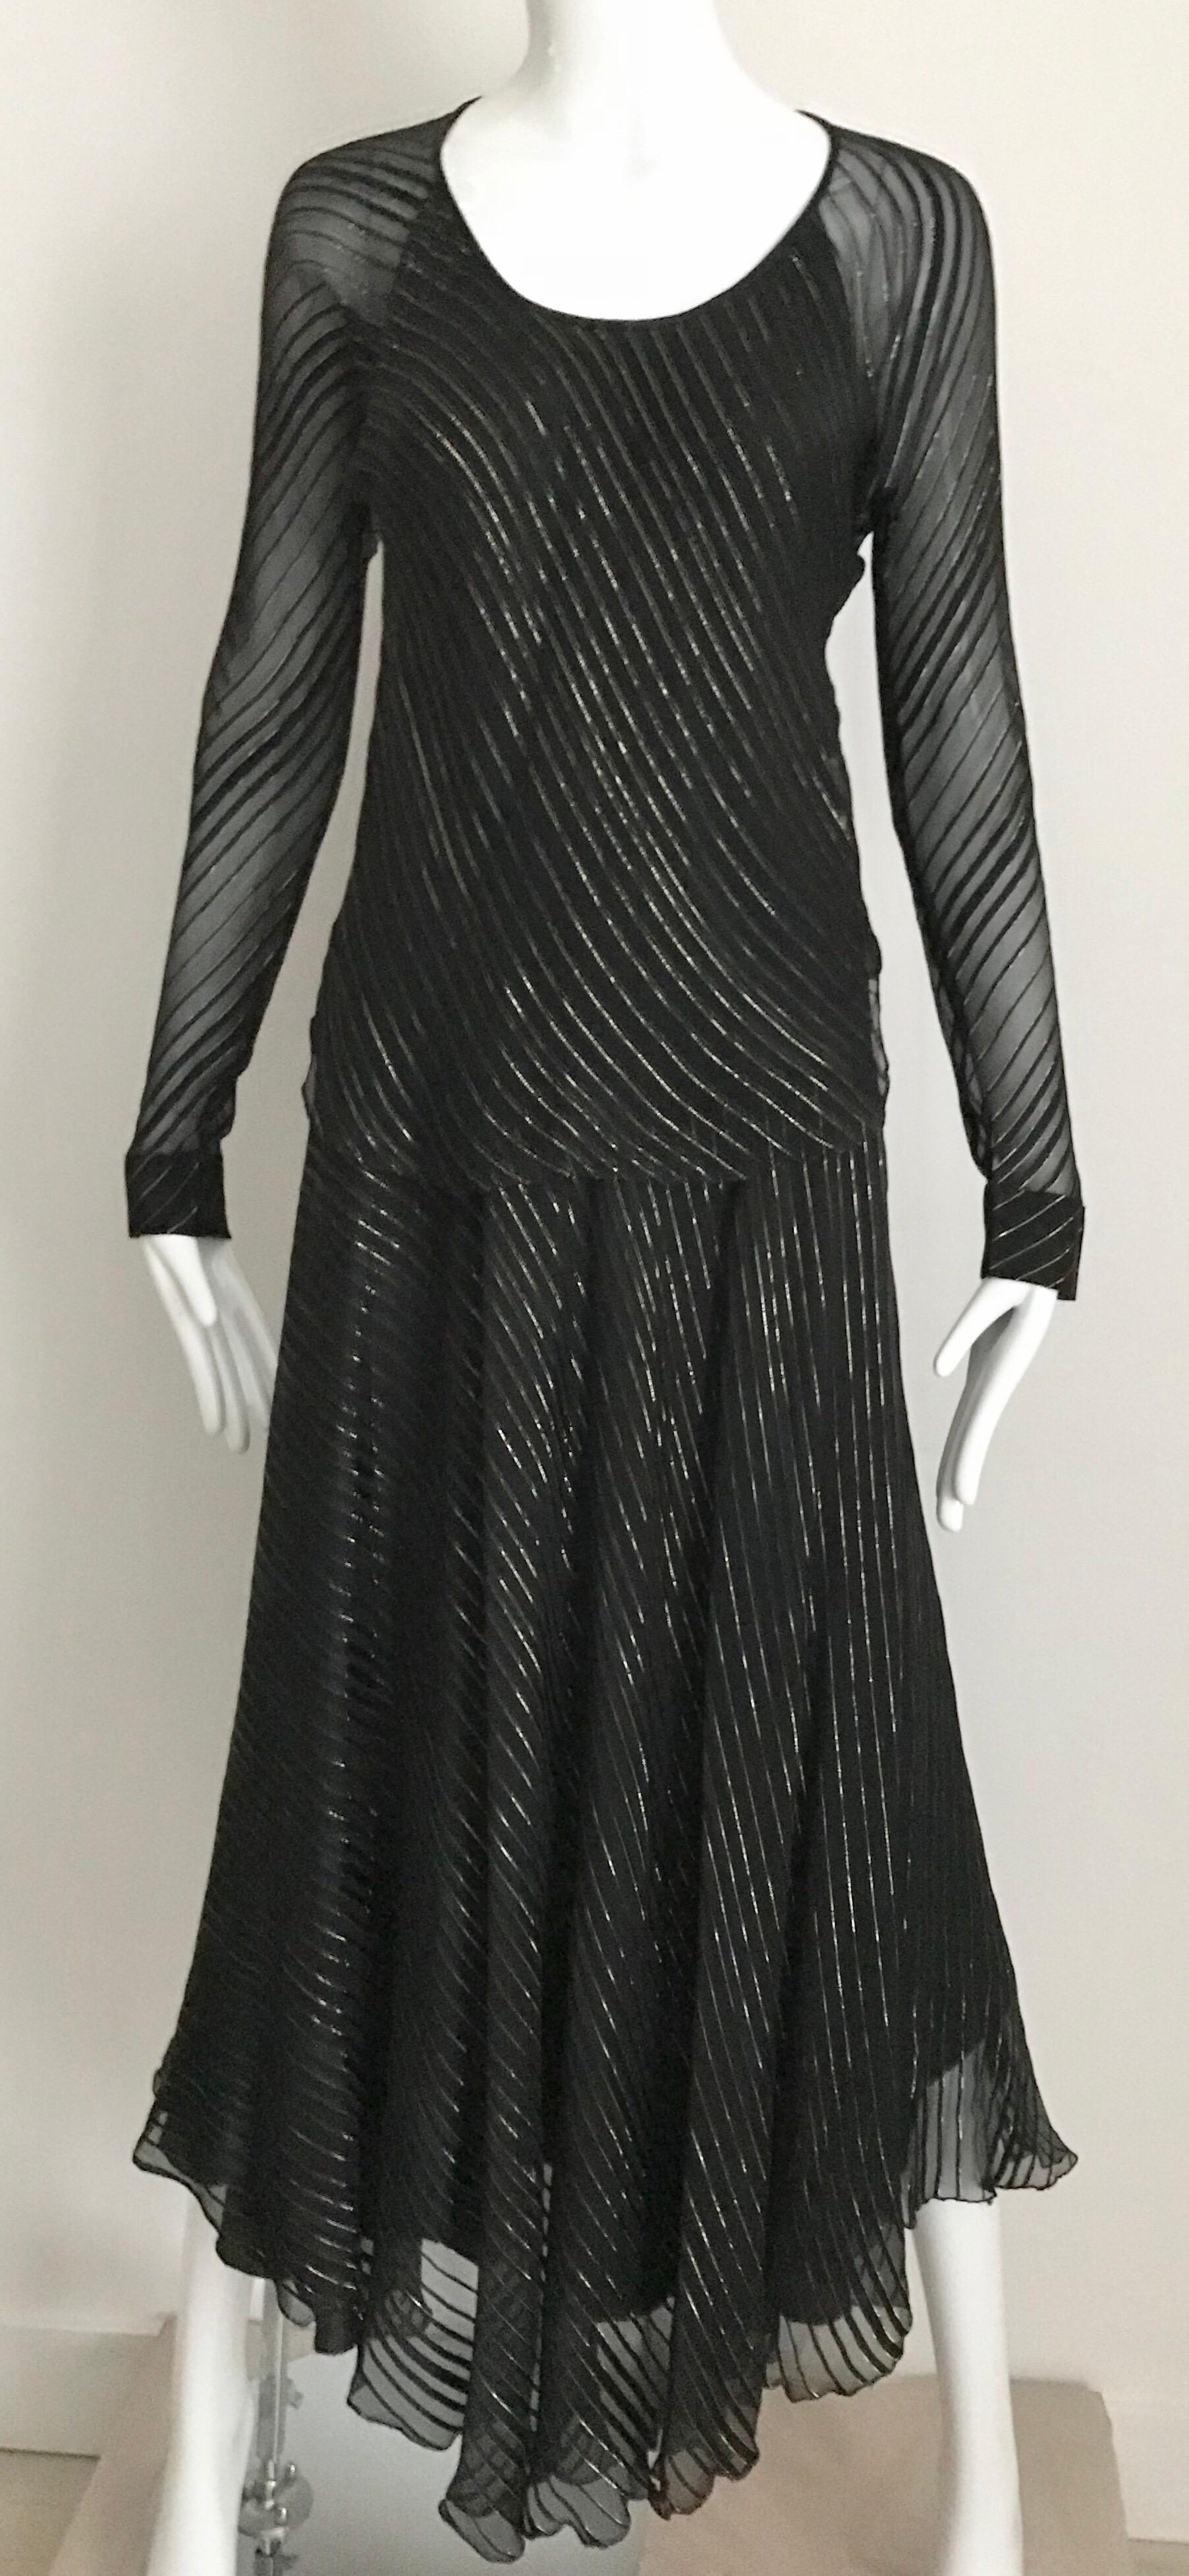 black and gild dress